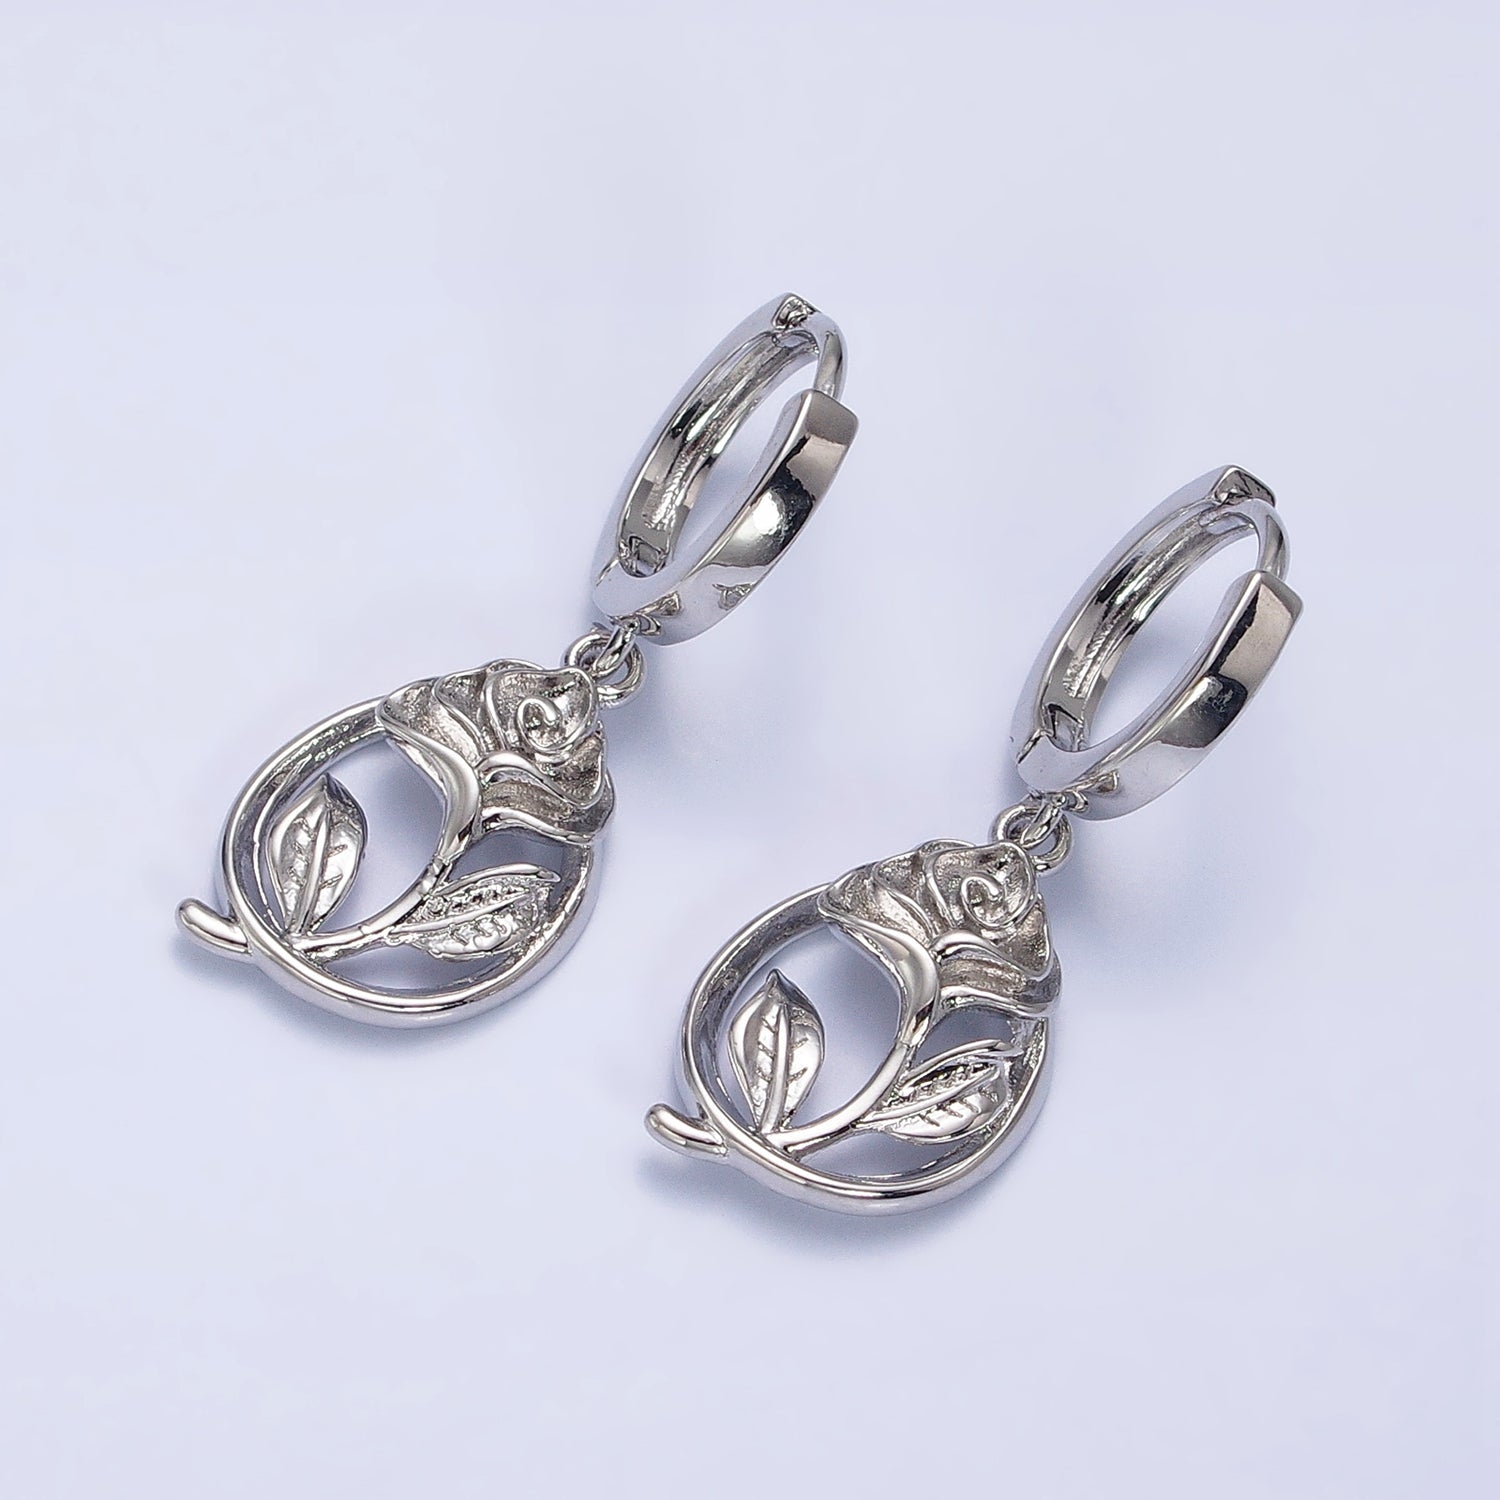 16K Gold Filled Rose Open Rose Flower Oval Drop Huggie Earrings in Silver & Gold | AB1549 AD1189